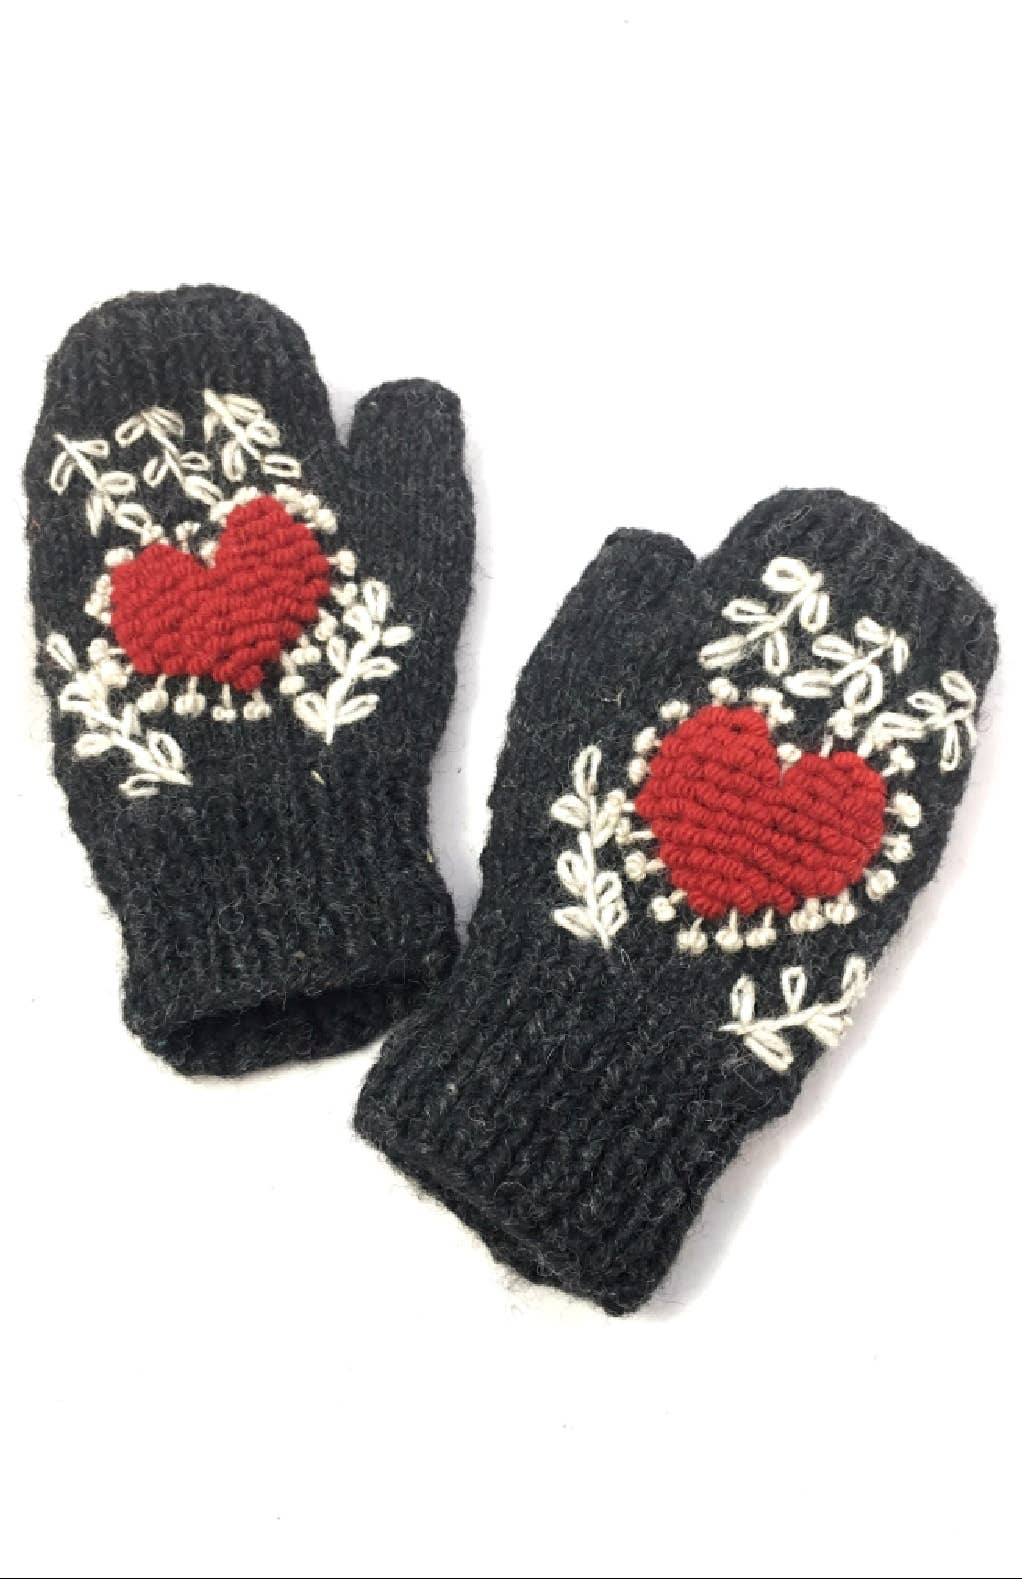 Embroidered Heart knit handwarmer, fleece lined